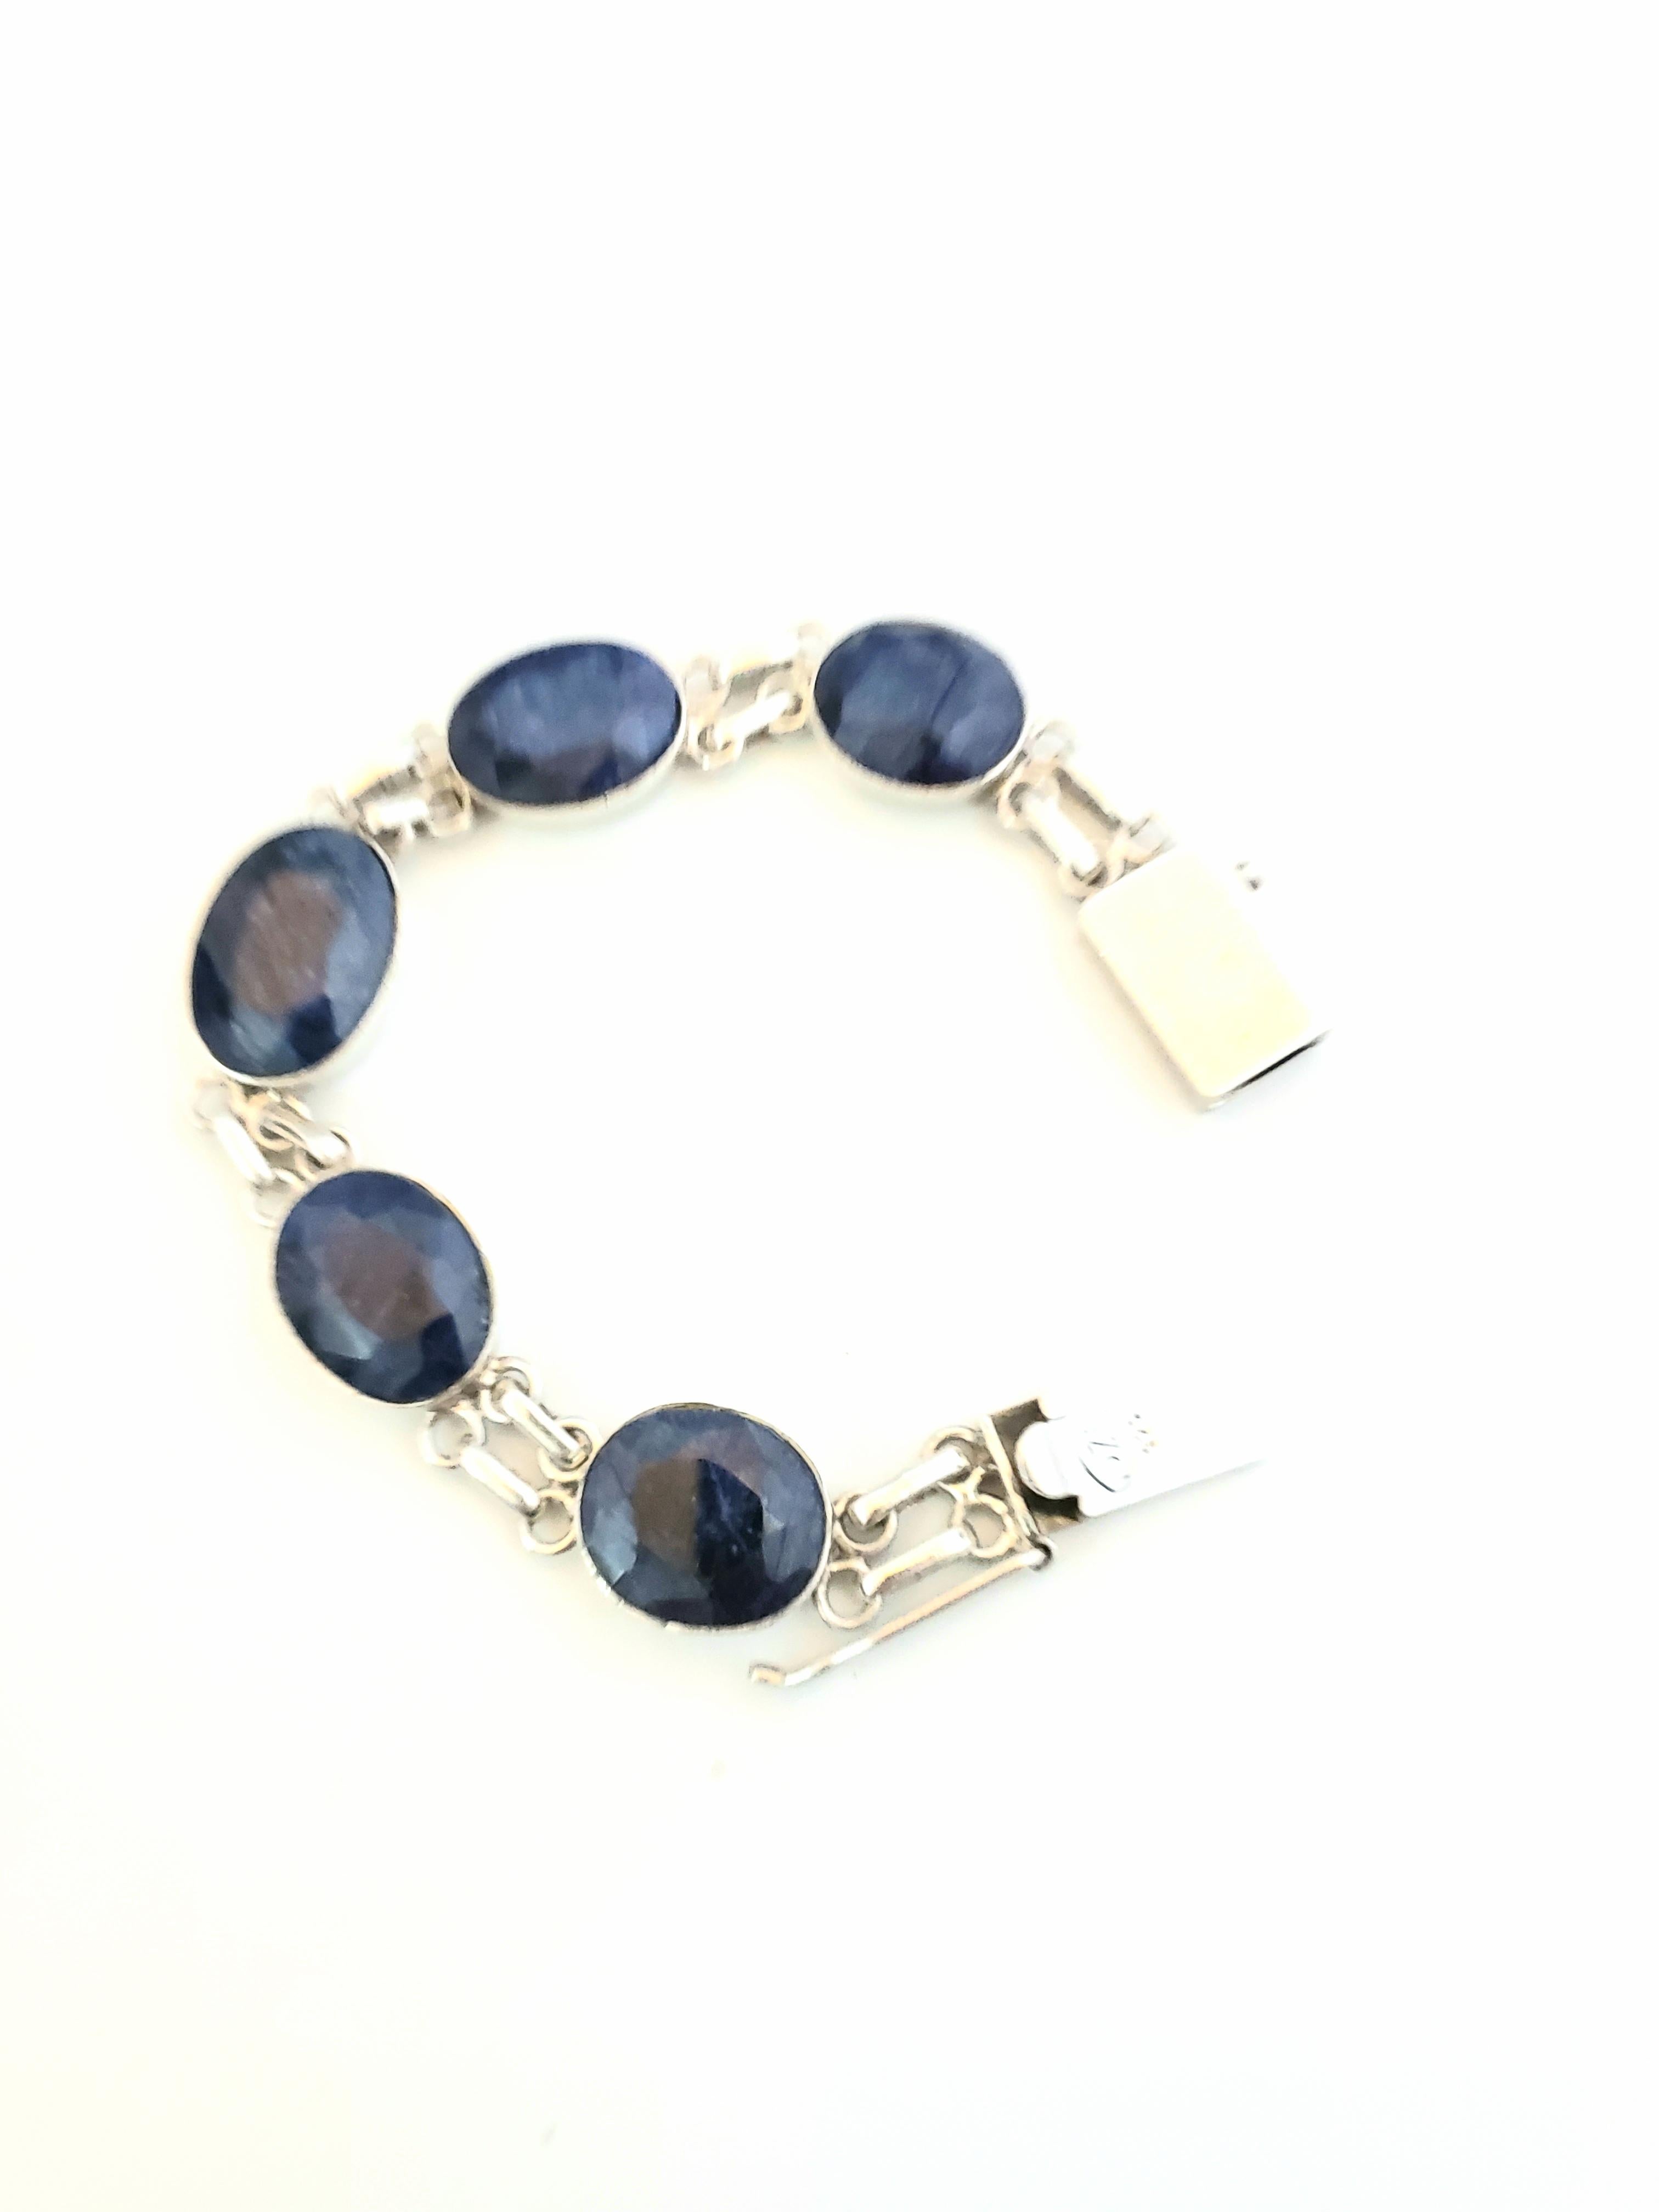 DZT Sterling Silver Blue Quartz Link Bracelet

This is a beautiful sterling silver DZT blue quartz link bracelet with slide clasp and safety lock.

Measurements:     Bracelet measures 7 1/2 inches length; 6 1/2 - 6 3/4 inches wrist.  1/2 inches